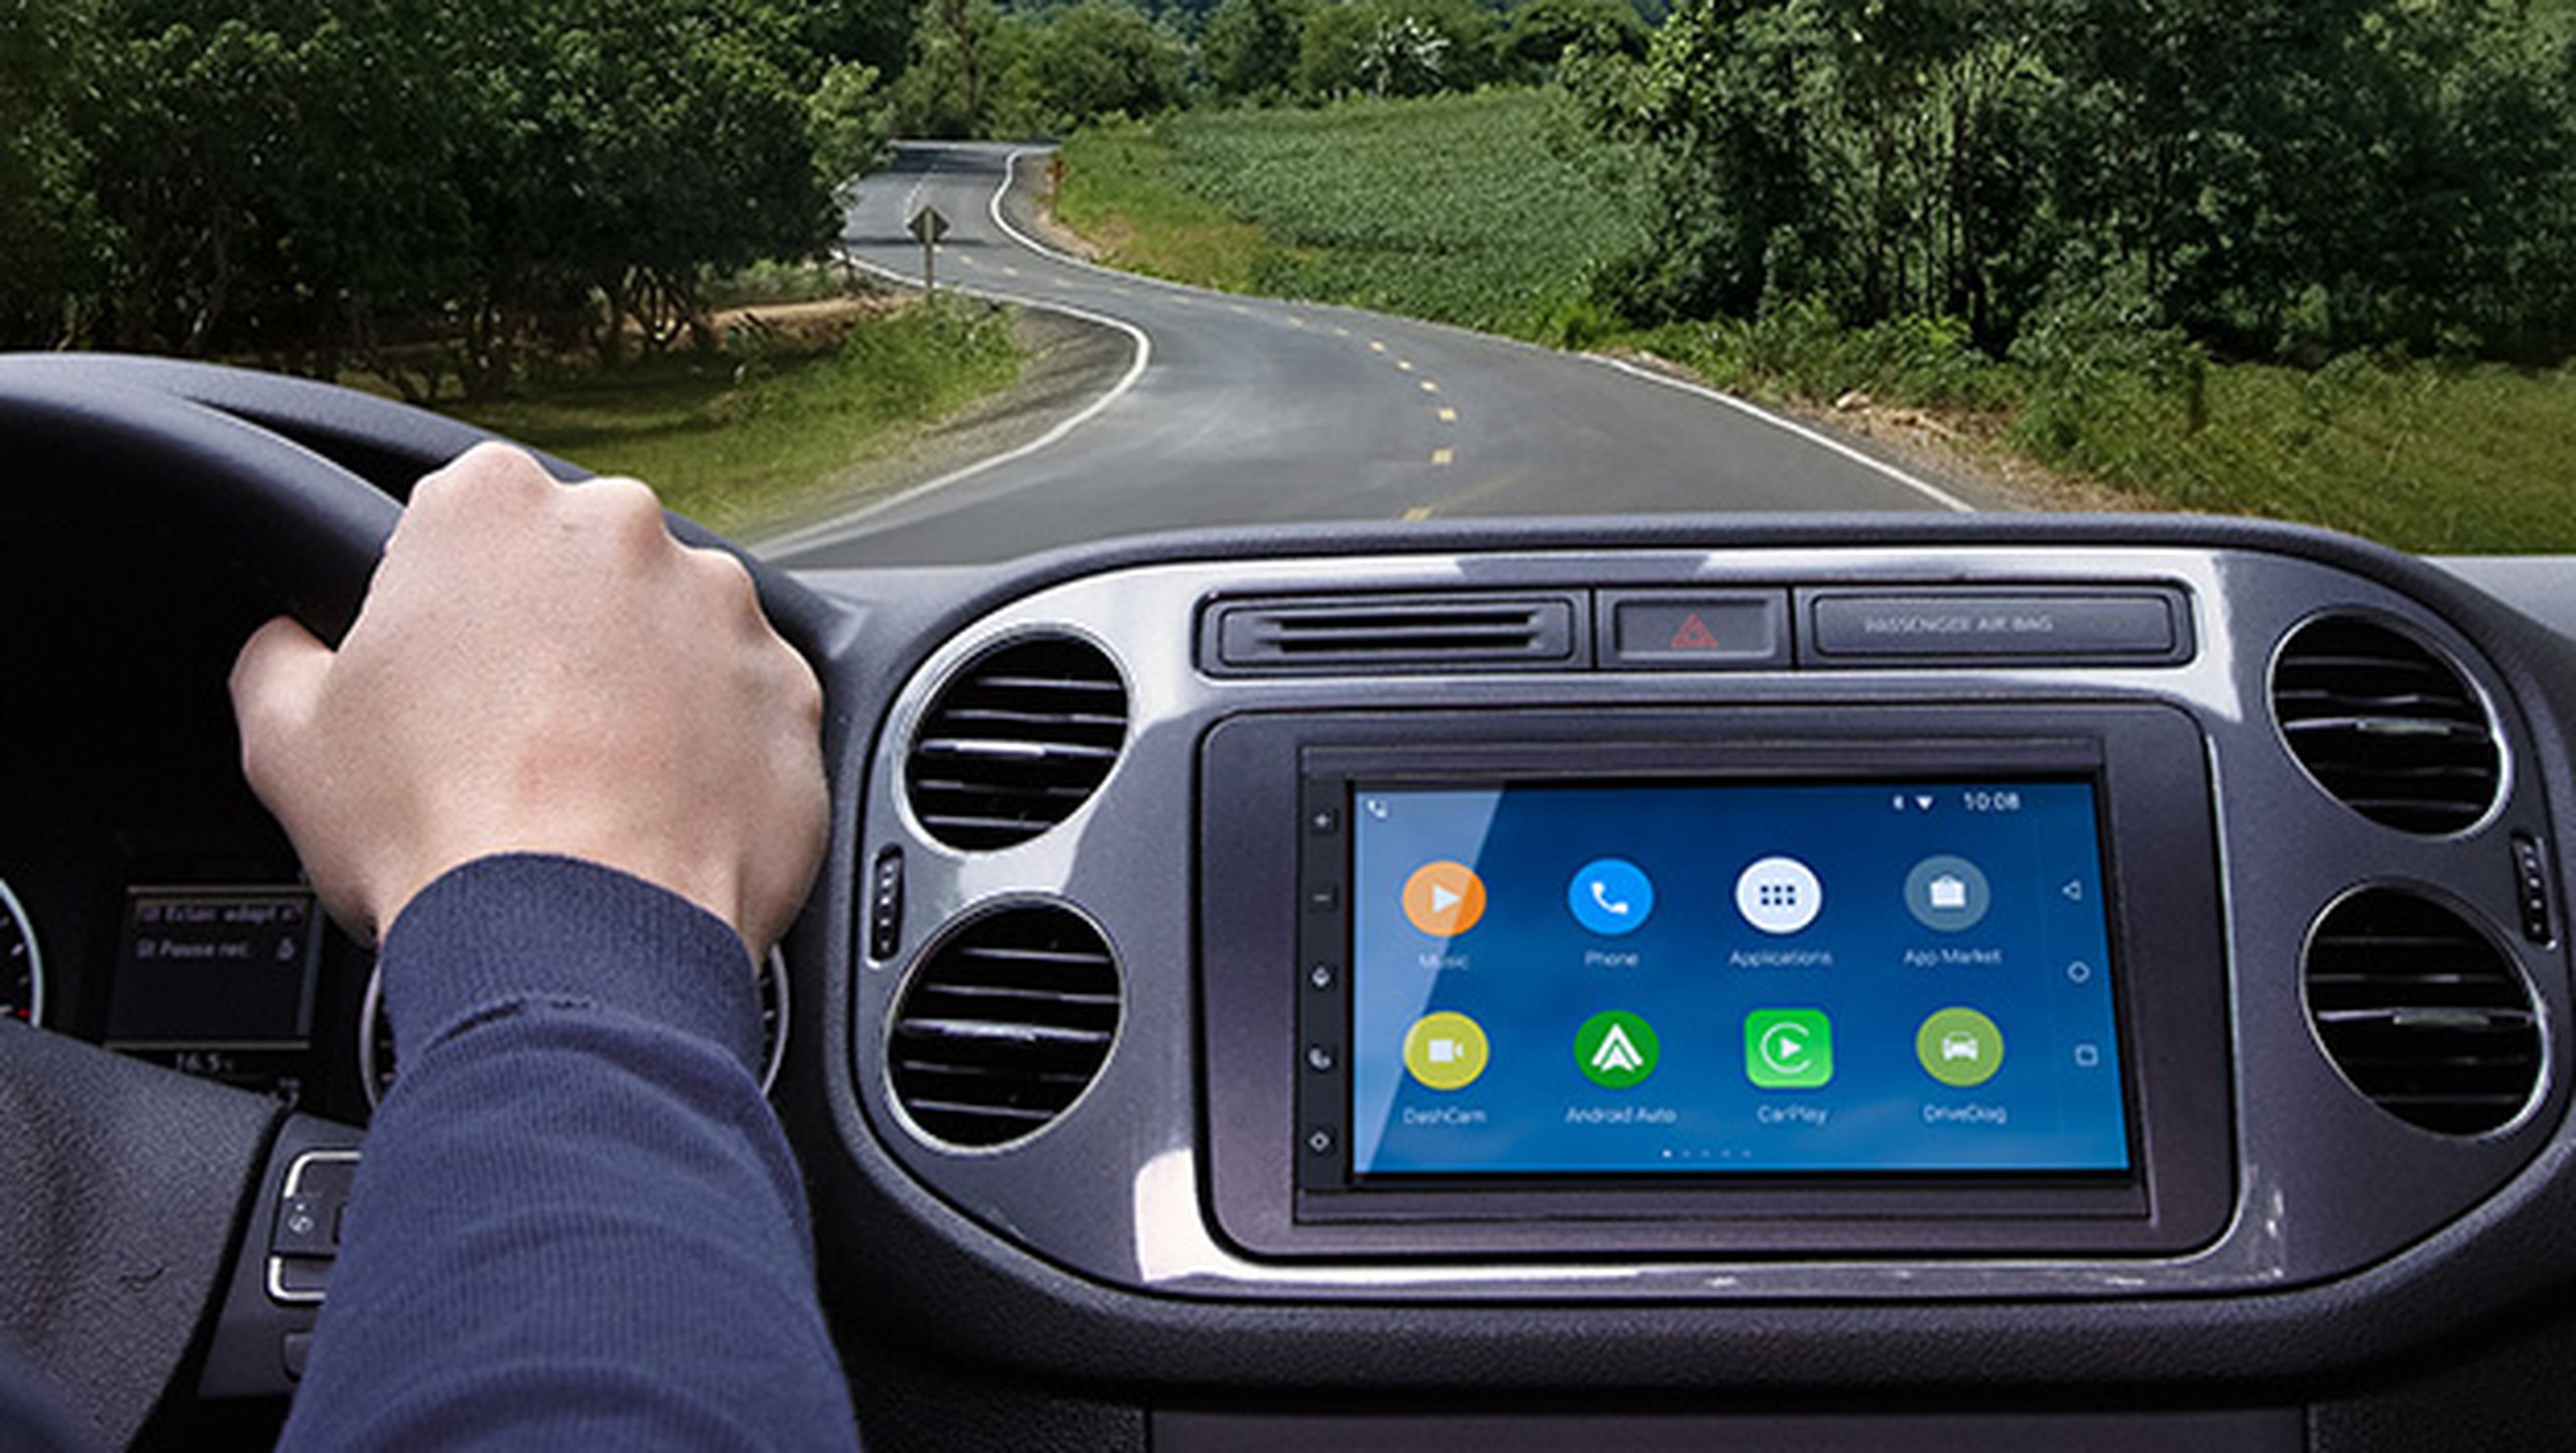 Android Auto podrá conectarse a tu coche vía WiFi